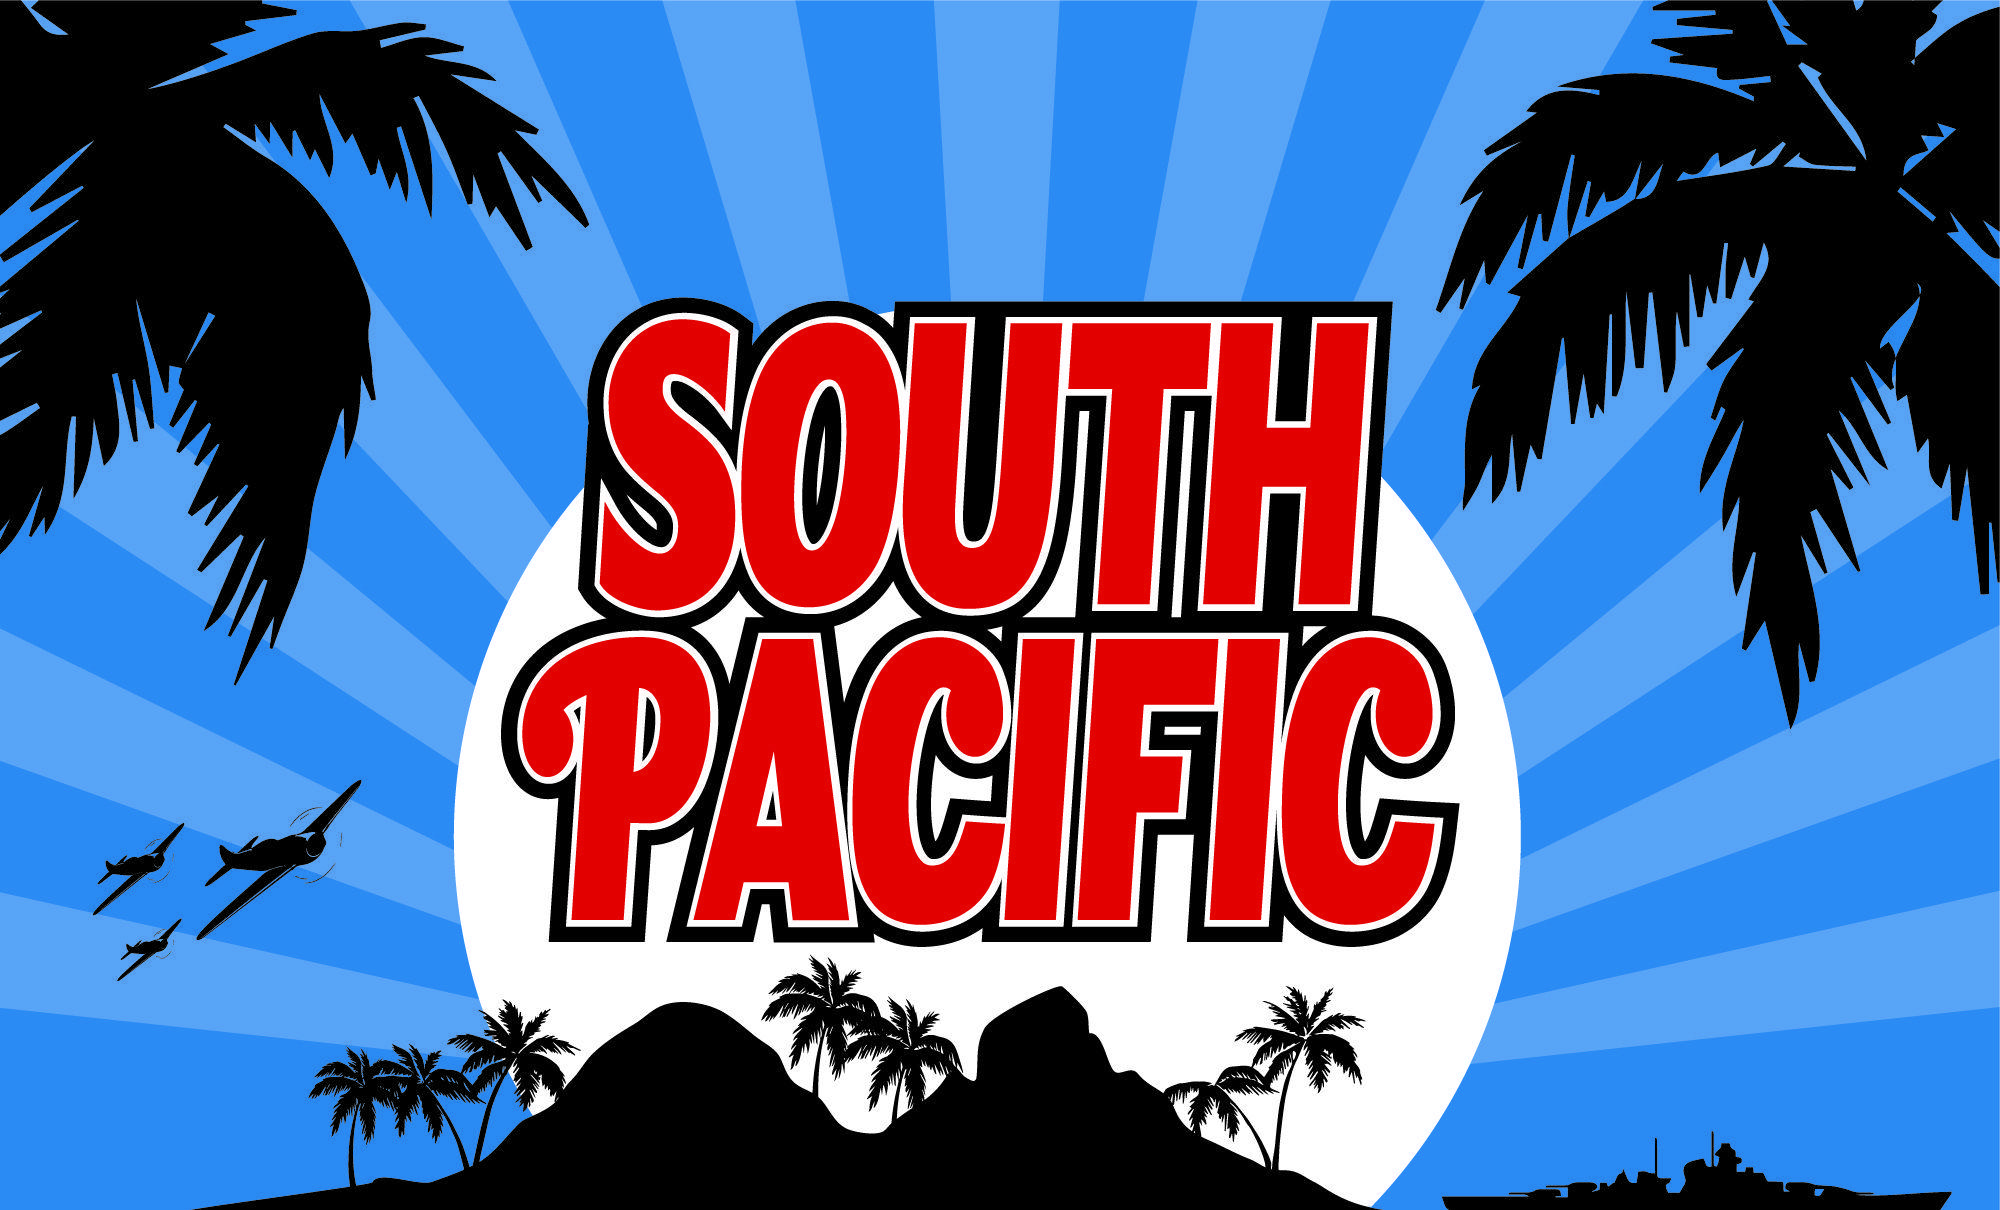 South Pacific Logo - Children's Theatre of Mason presents South Pacific. ArtsWave Guide